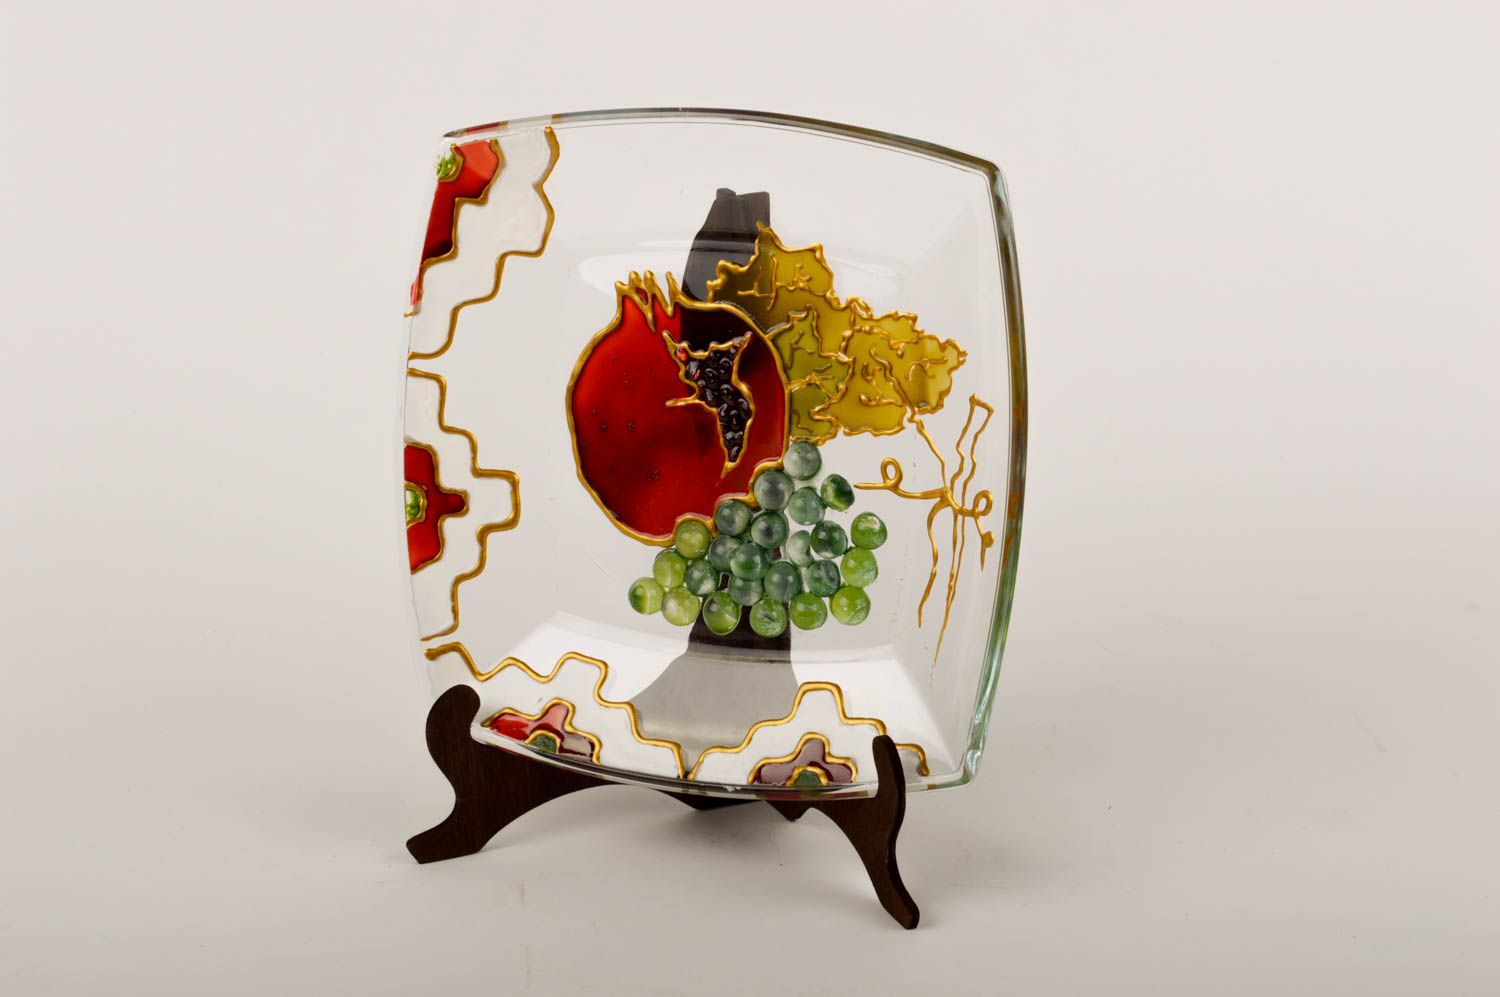 Beautiful handmade glass plate glass art small gifts decorative use only photo 1